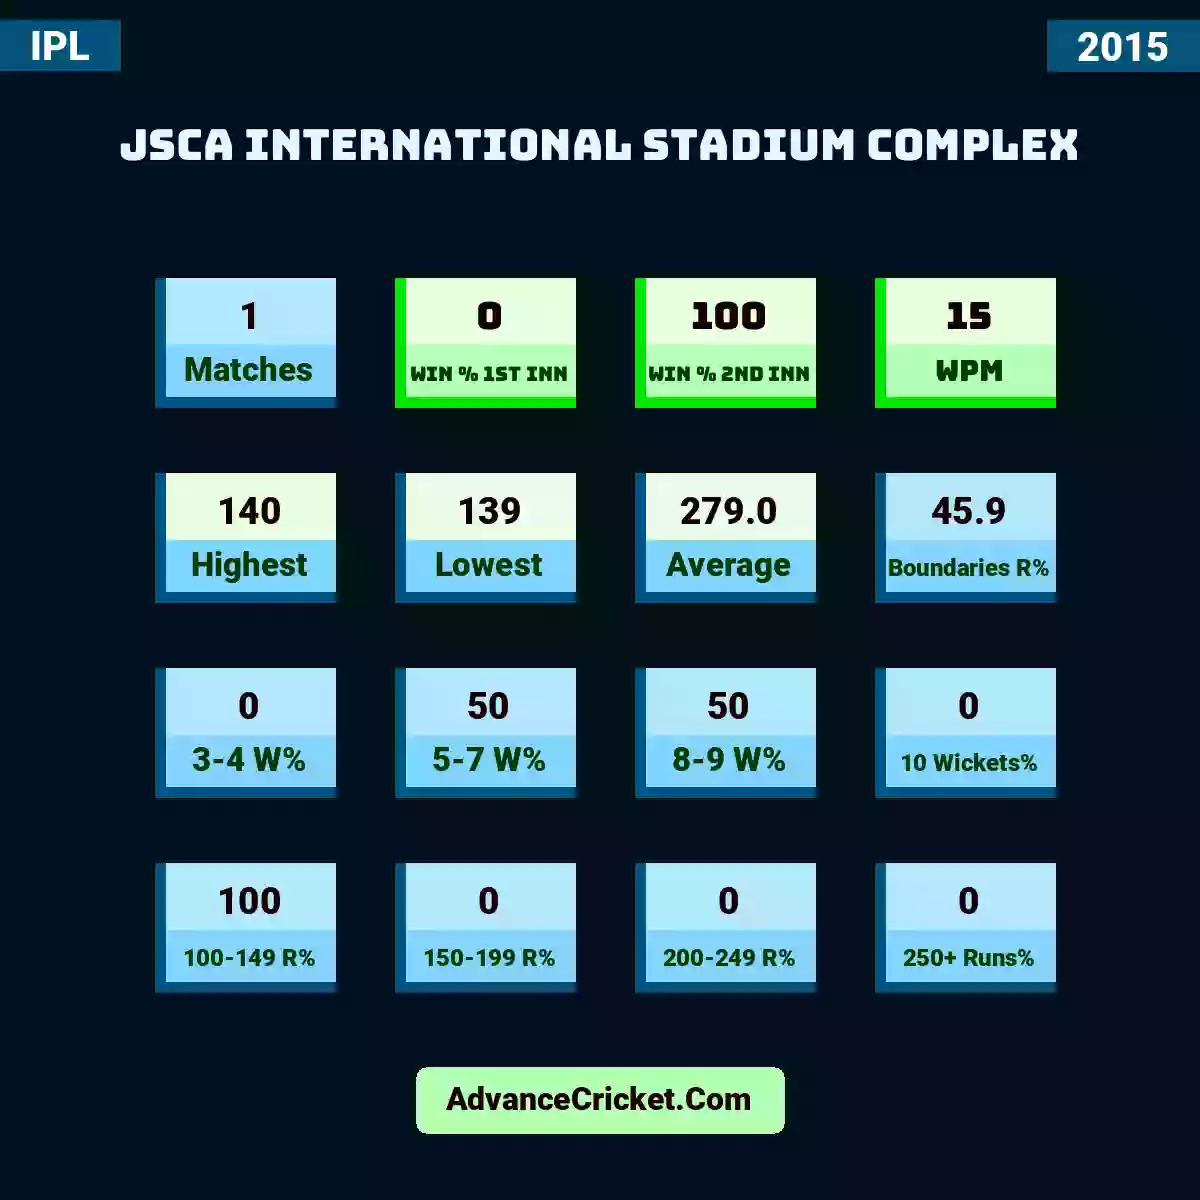 Image showing JSCA International Stadium Complex with Matches: 1, Win % 1st Inn: 0, Win % 2nd Inn: 100, WPM: 15, Highest: 140, Lowest: 139, Average: 279.0, Boundaries R%: 45.9, 3-4 W%: 0, 5-7 W%: 50, 8-9 W%: 50, 10 Wickets%: 0, 100-149 R%: 100, 150-199 R%: 0, 200-249 R%: 0, 250+ Runs%: 0.